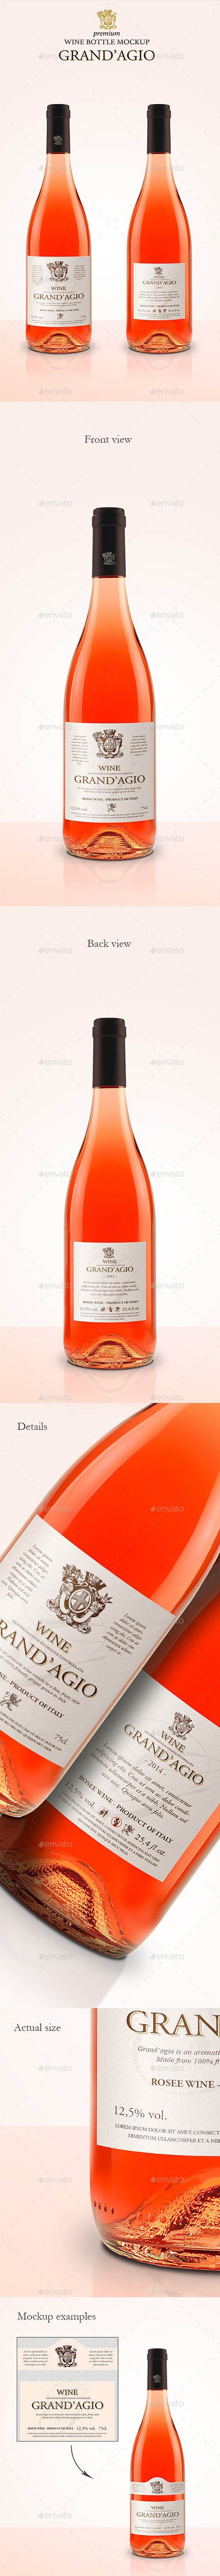 GraphicRiver - Premium Rosé Wine Mockup - 7141676